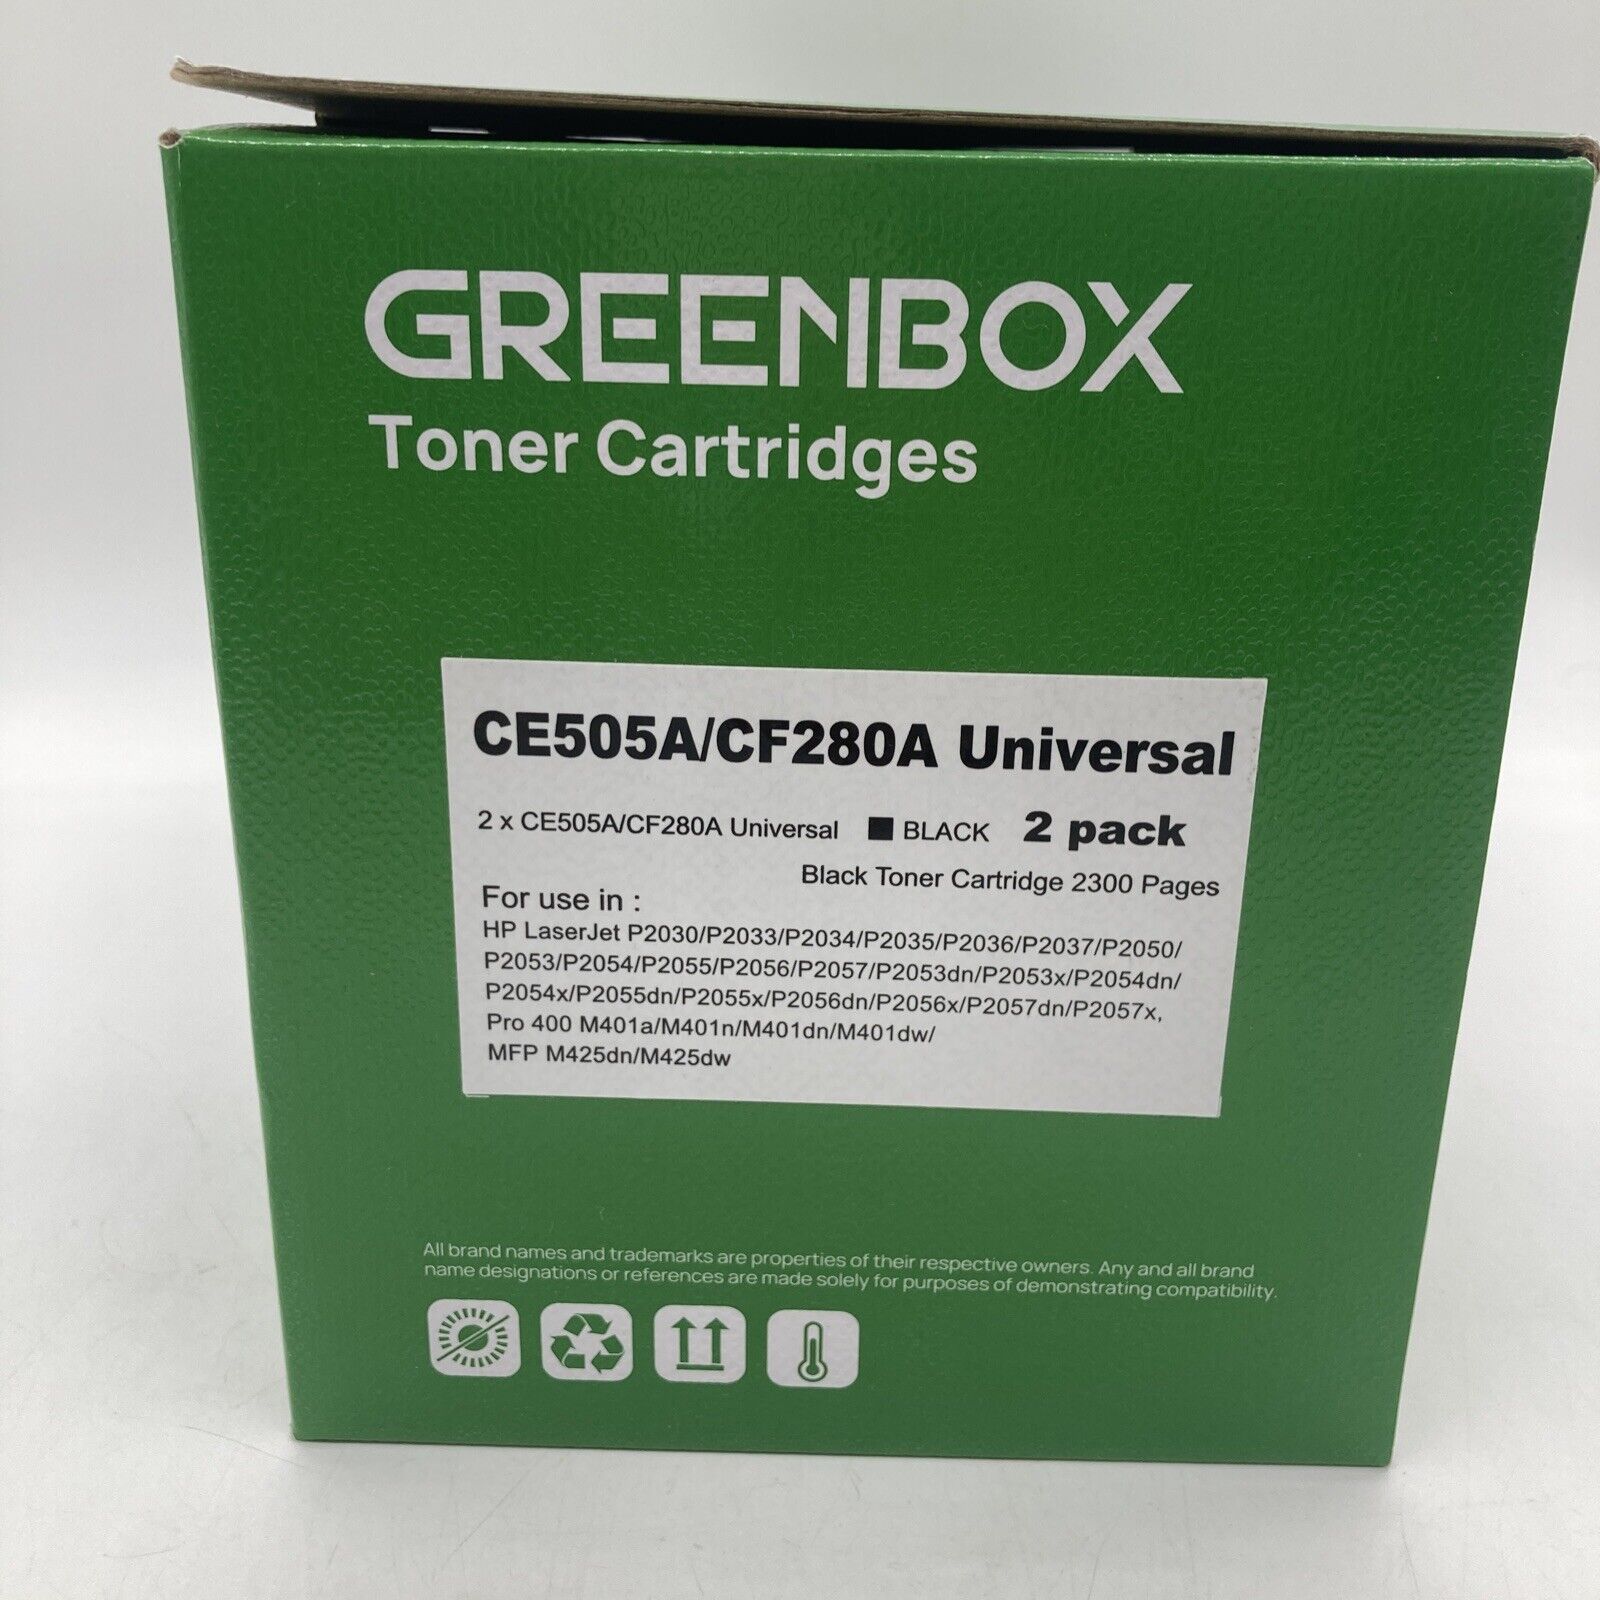 GreenBox 2 pack Premium Toner Cartridges CE505A/CF280A Universal Black